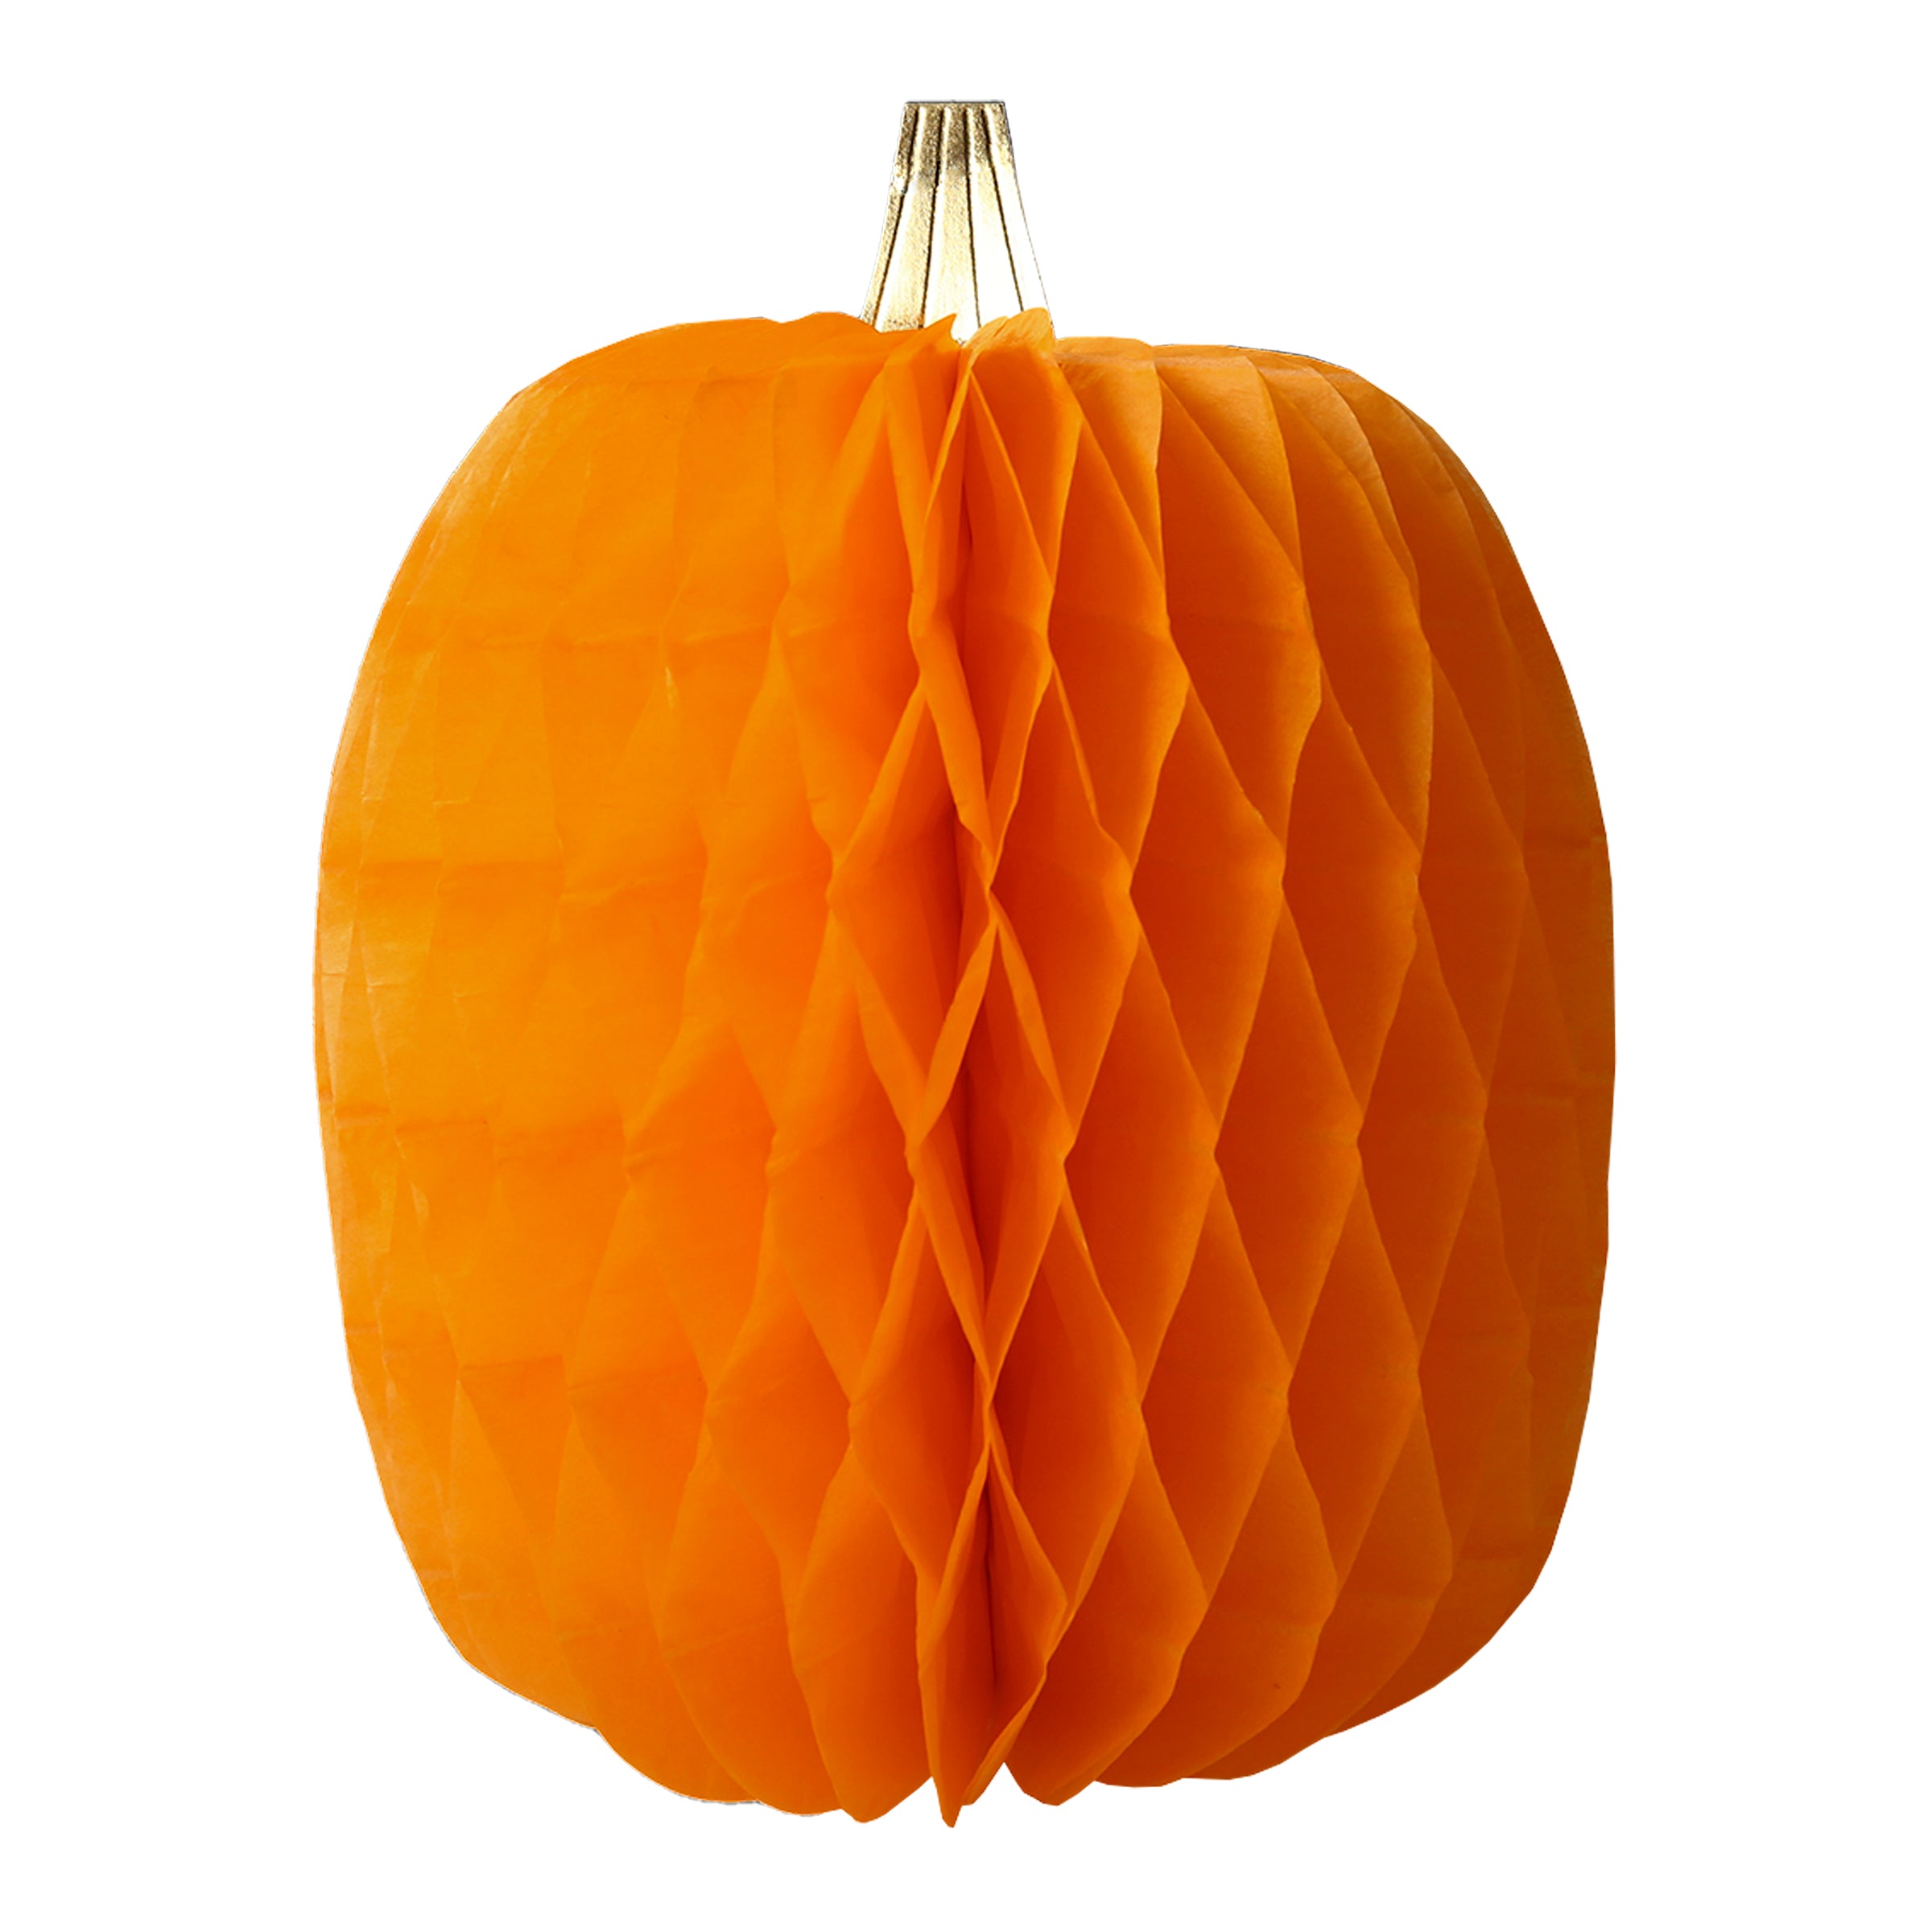 Our paper pumpkins make fabulous Halloween paper decorations.